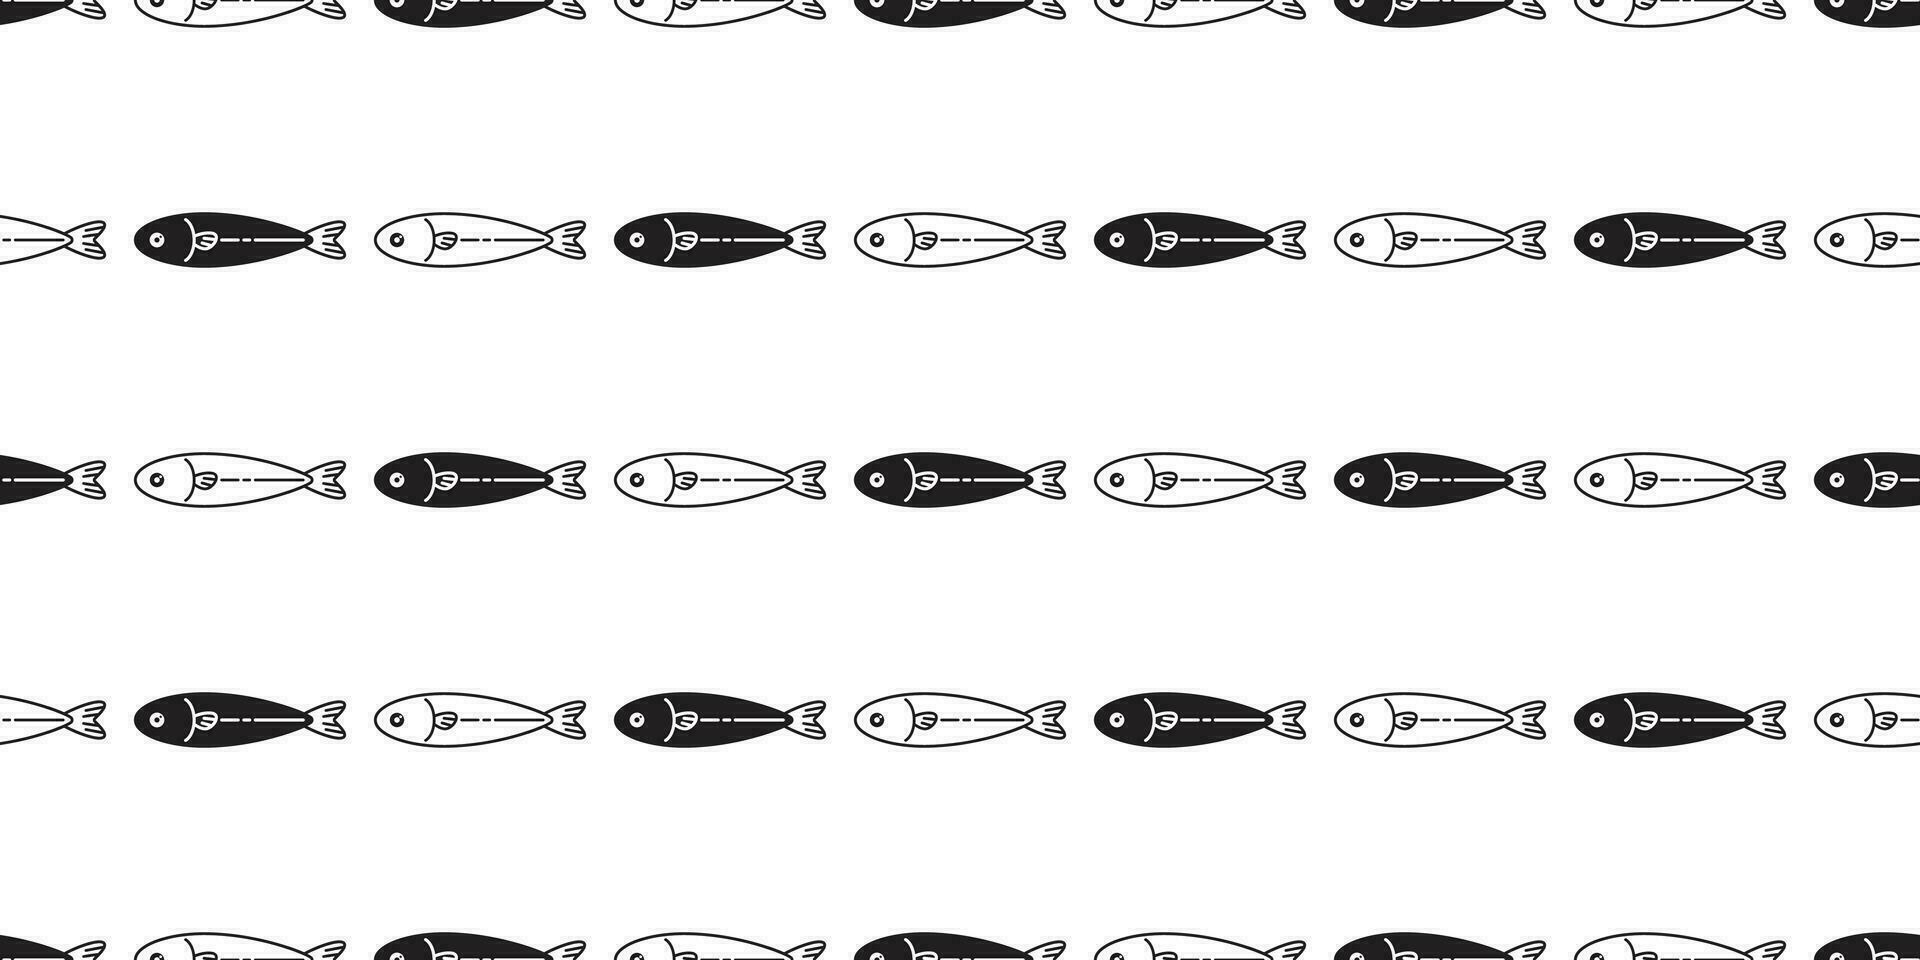 pescado sin costura modelo atún vector tiburón salmón bufanda aislado delfín ballena Oceano mar repetir fondo de pantalla loseta antecedentes dibujos animados garabatear ilustración diseño